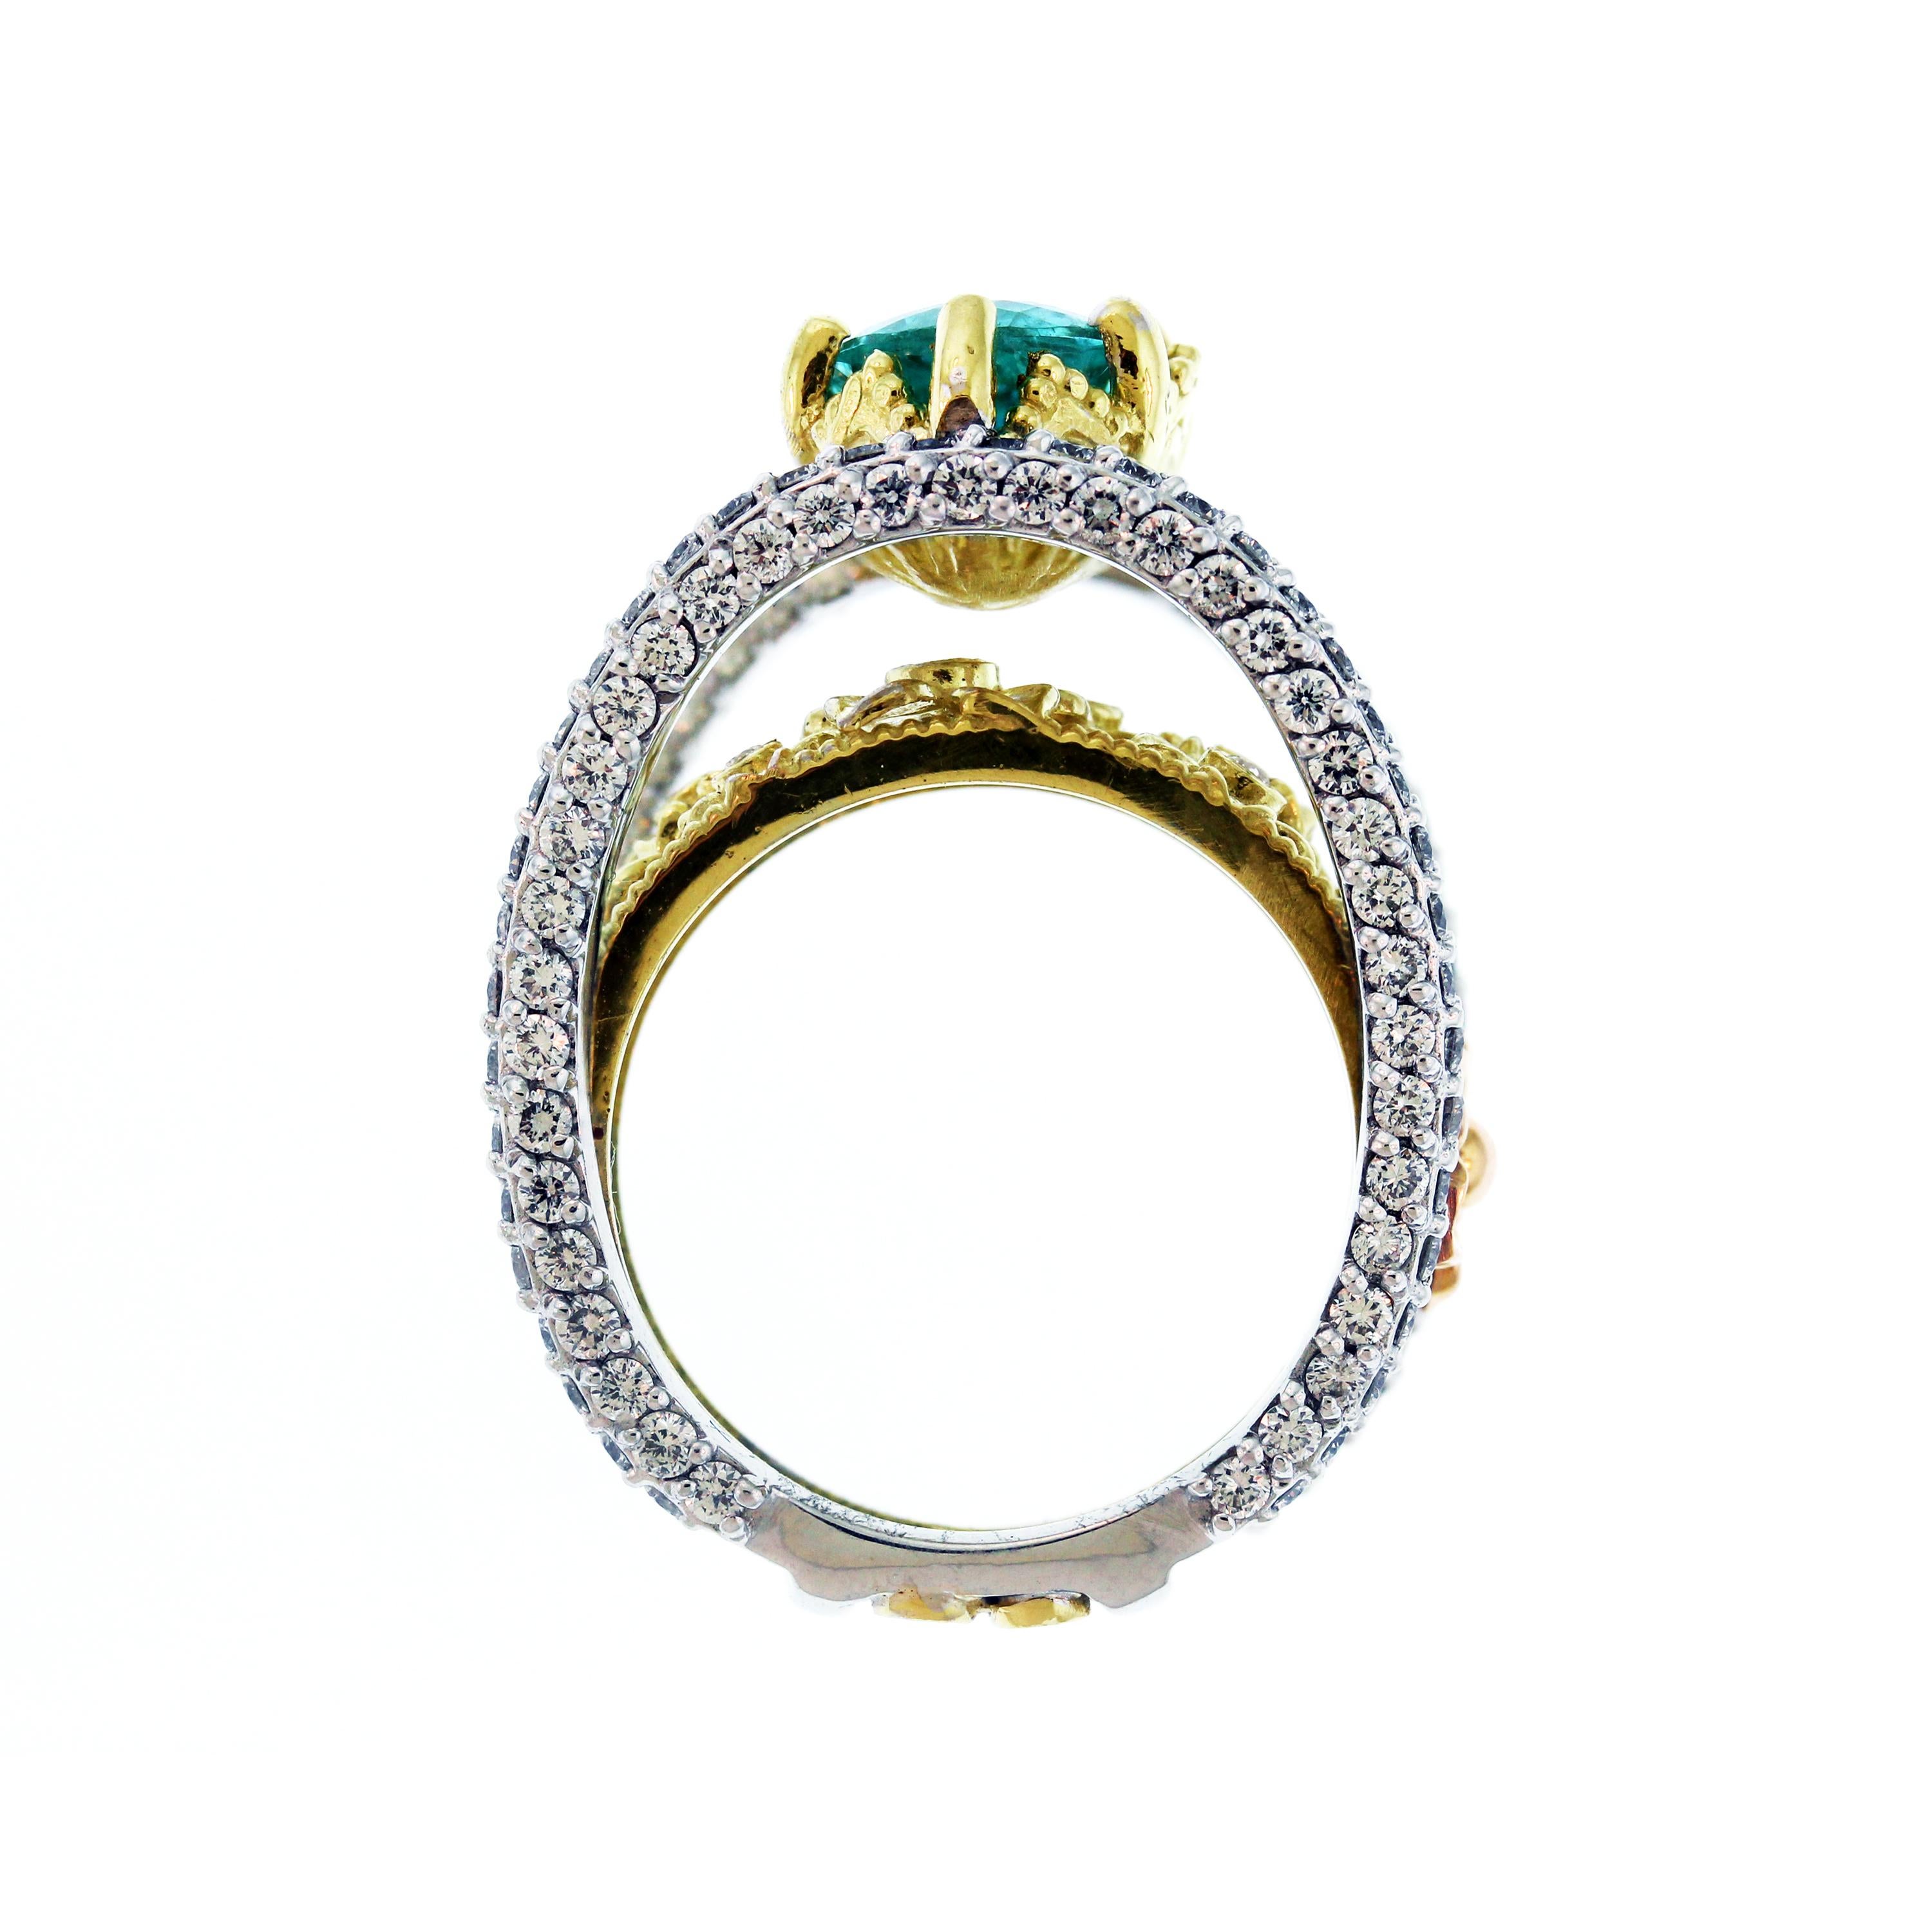 Oval Cut Stambolian 18K Tri-Color Gold Paraiba Copper Bearing Tourmaline Diamond Ring